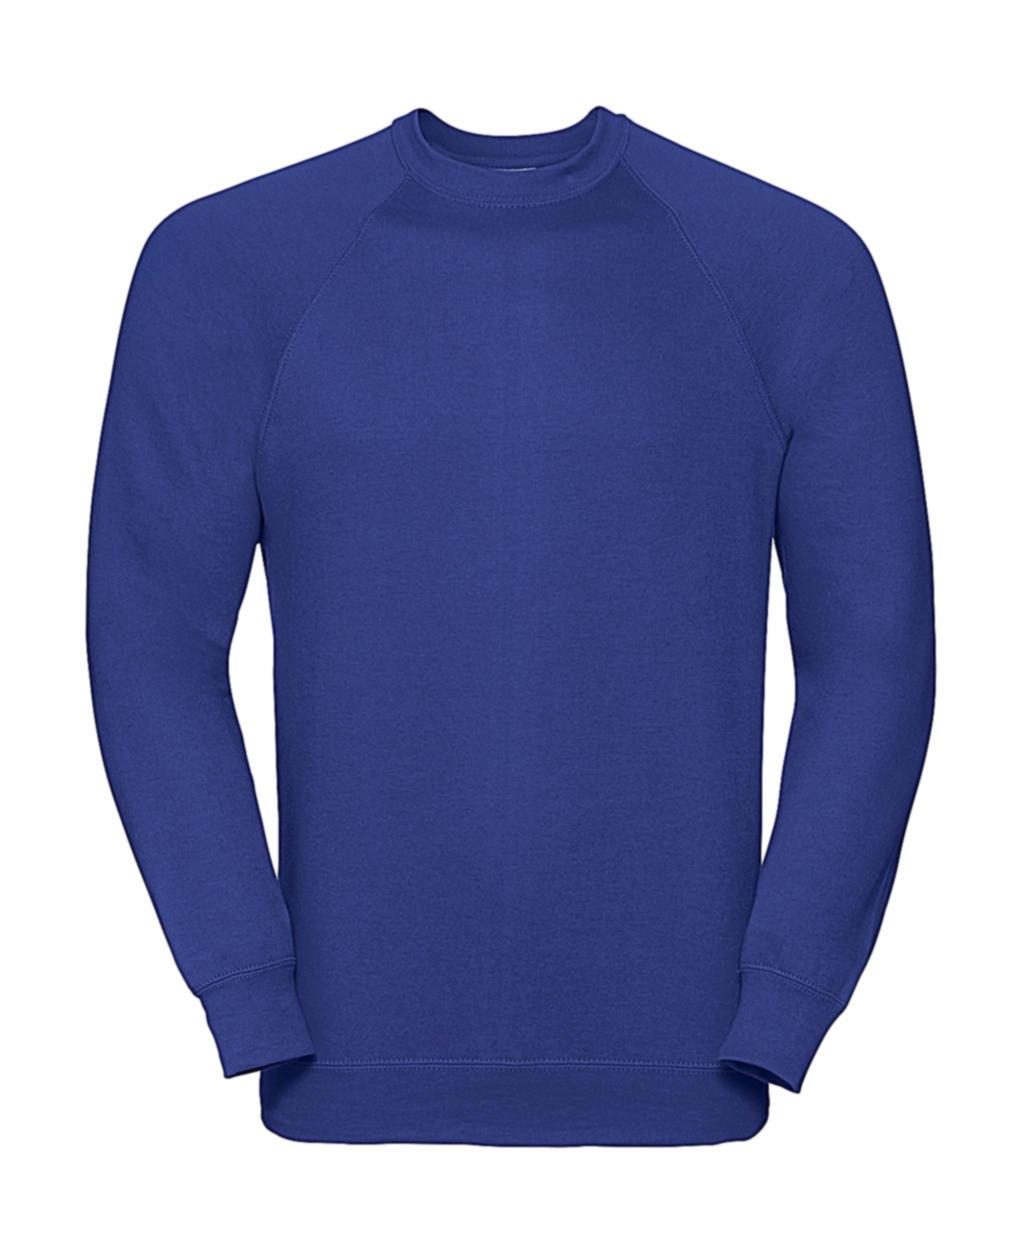  Classic Raglan Sweatshirt in Farbe Bright Royal